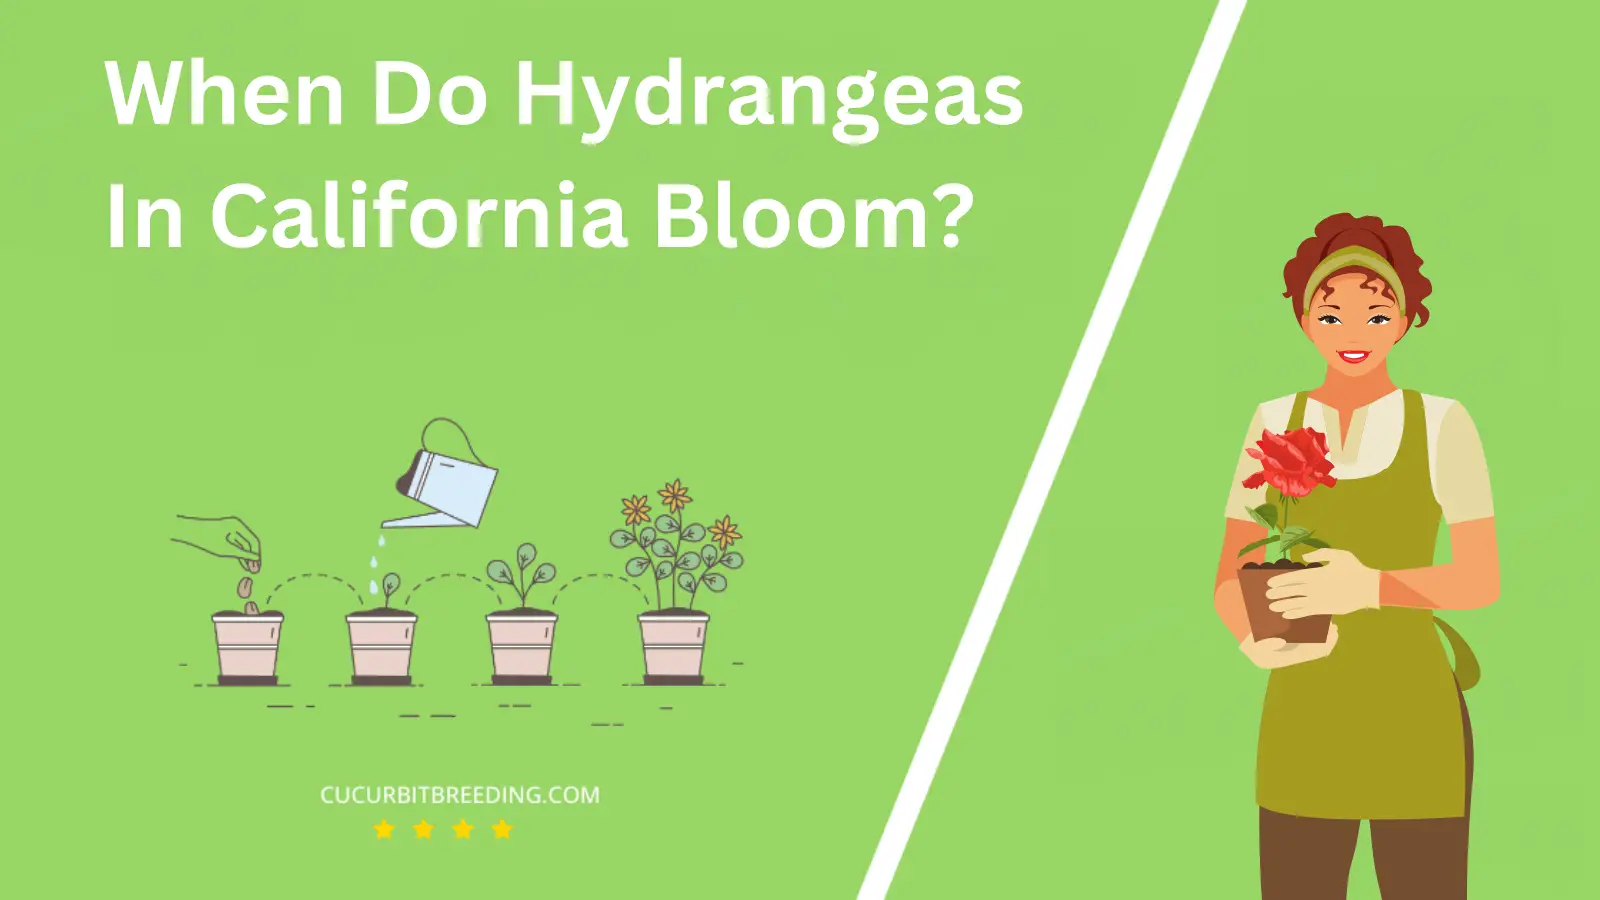 When Do Hydrangeas In California Bloom?